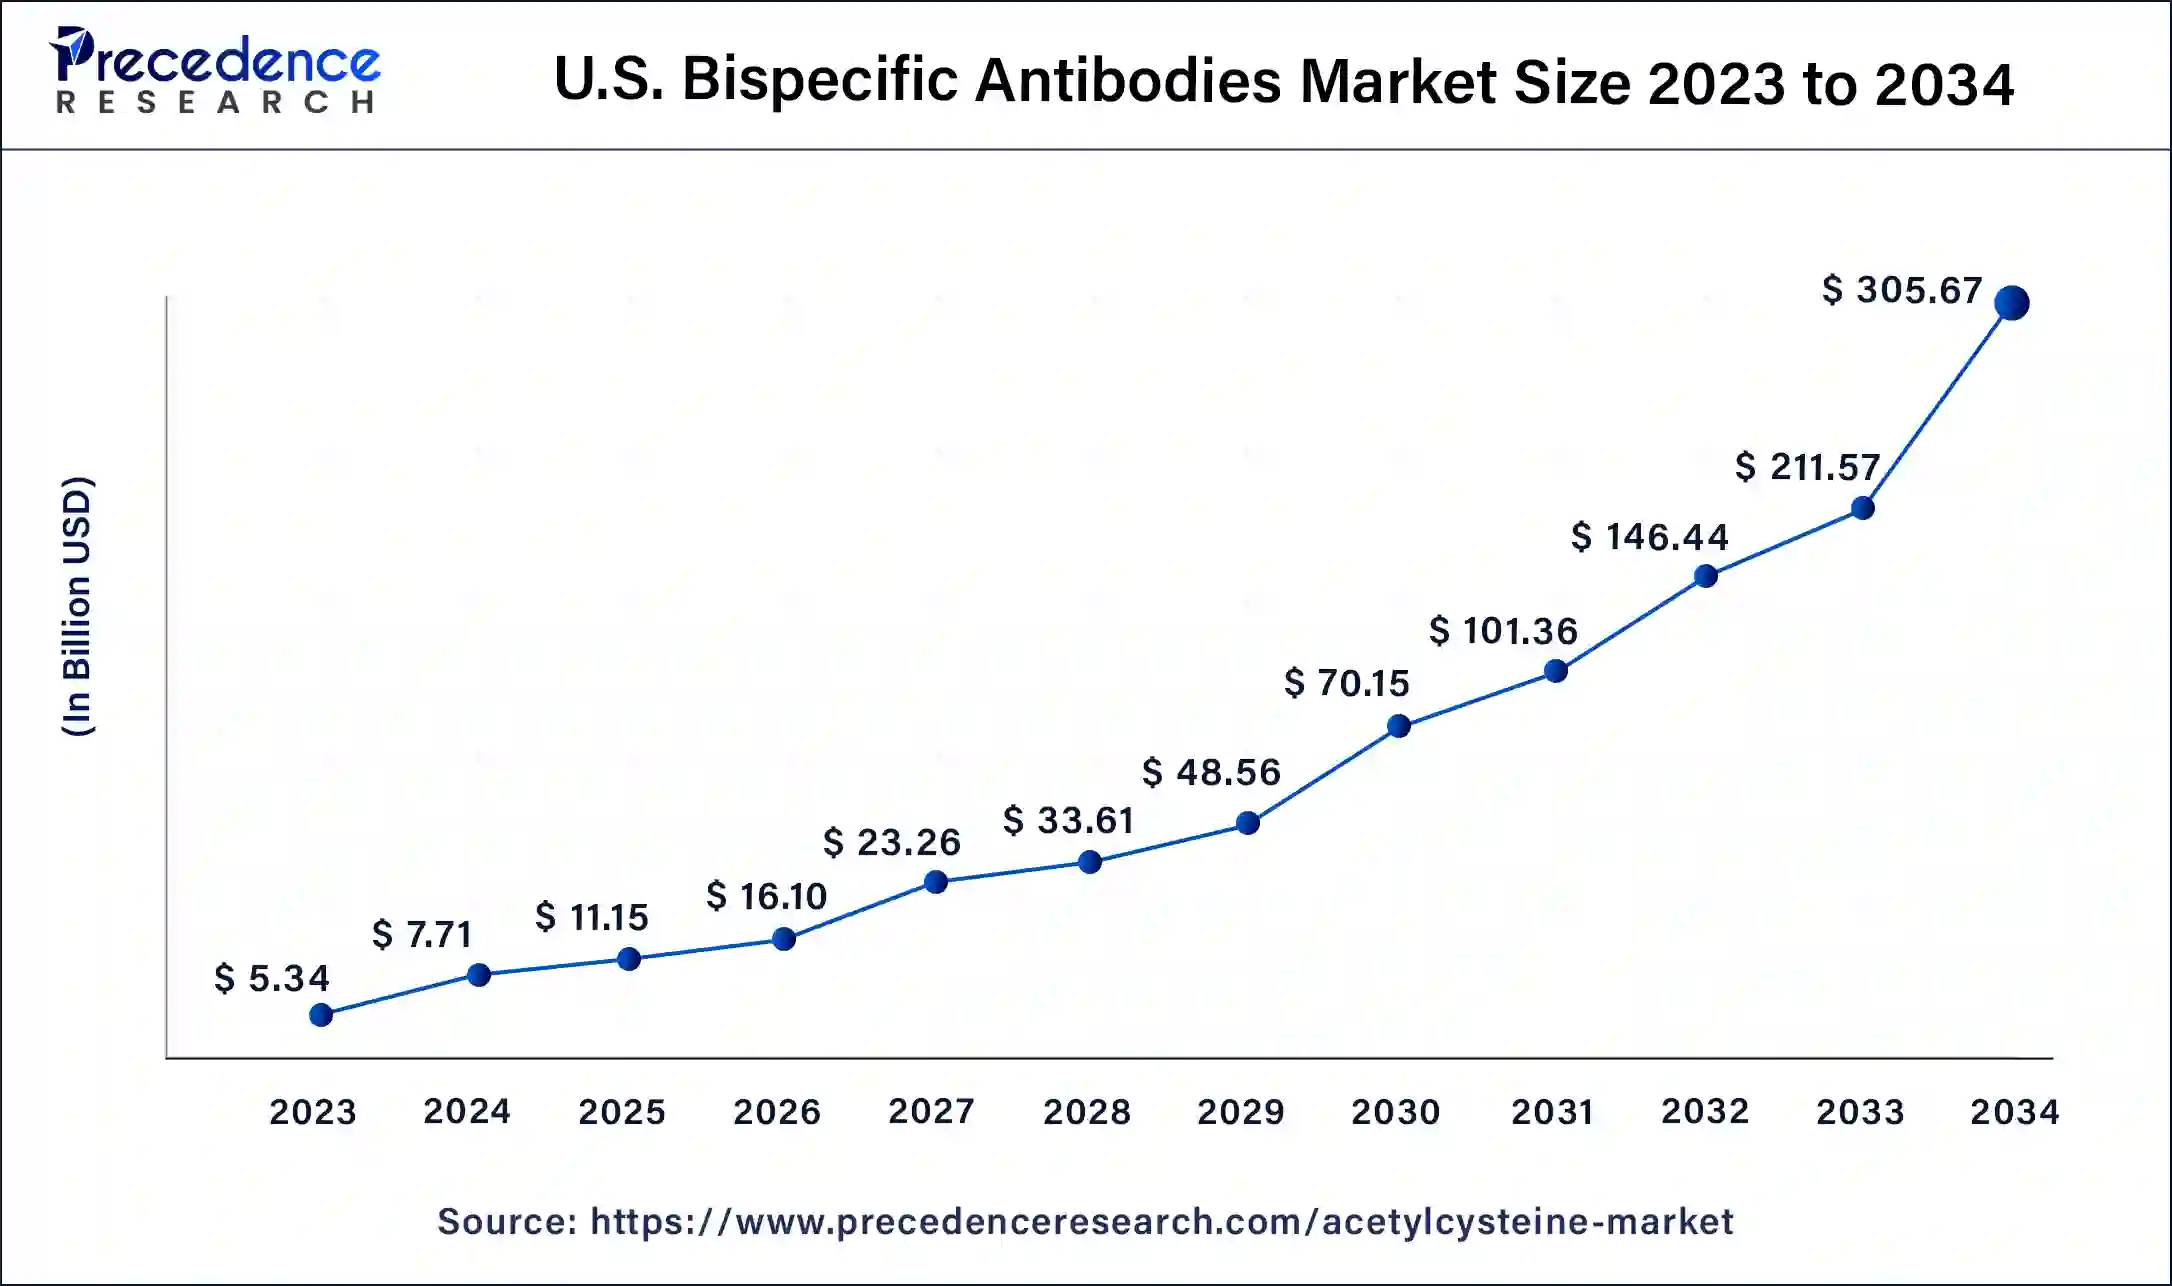 U.S. Bispecific Antibodies Market Size 2024 to 2034 